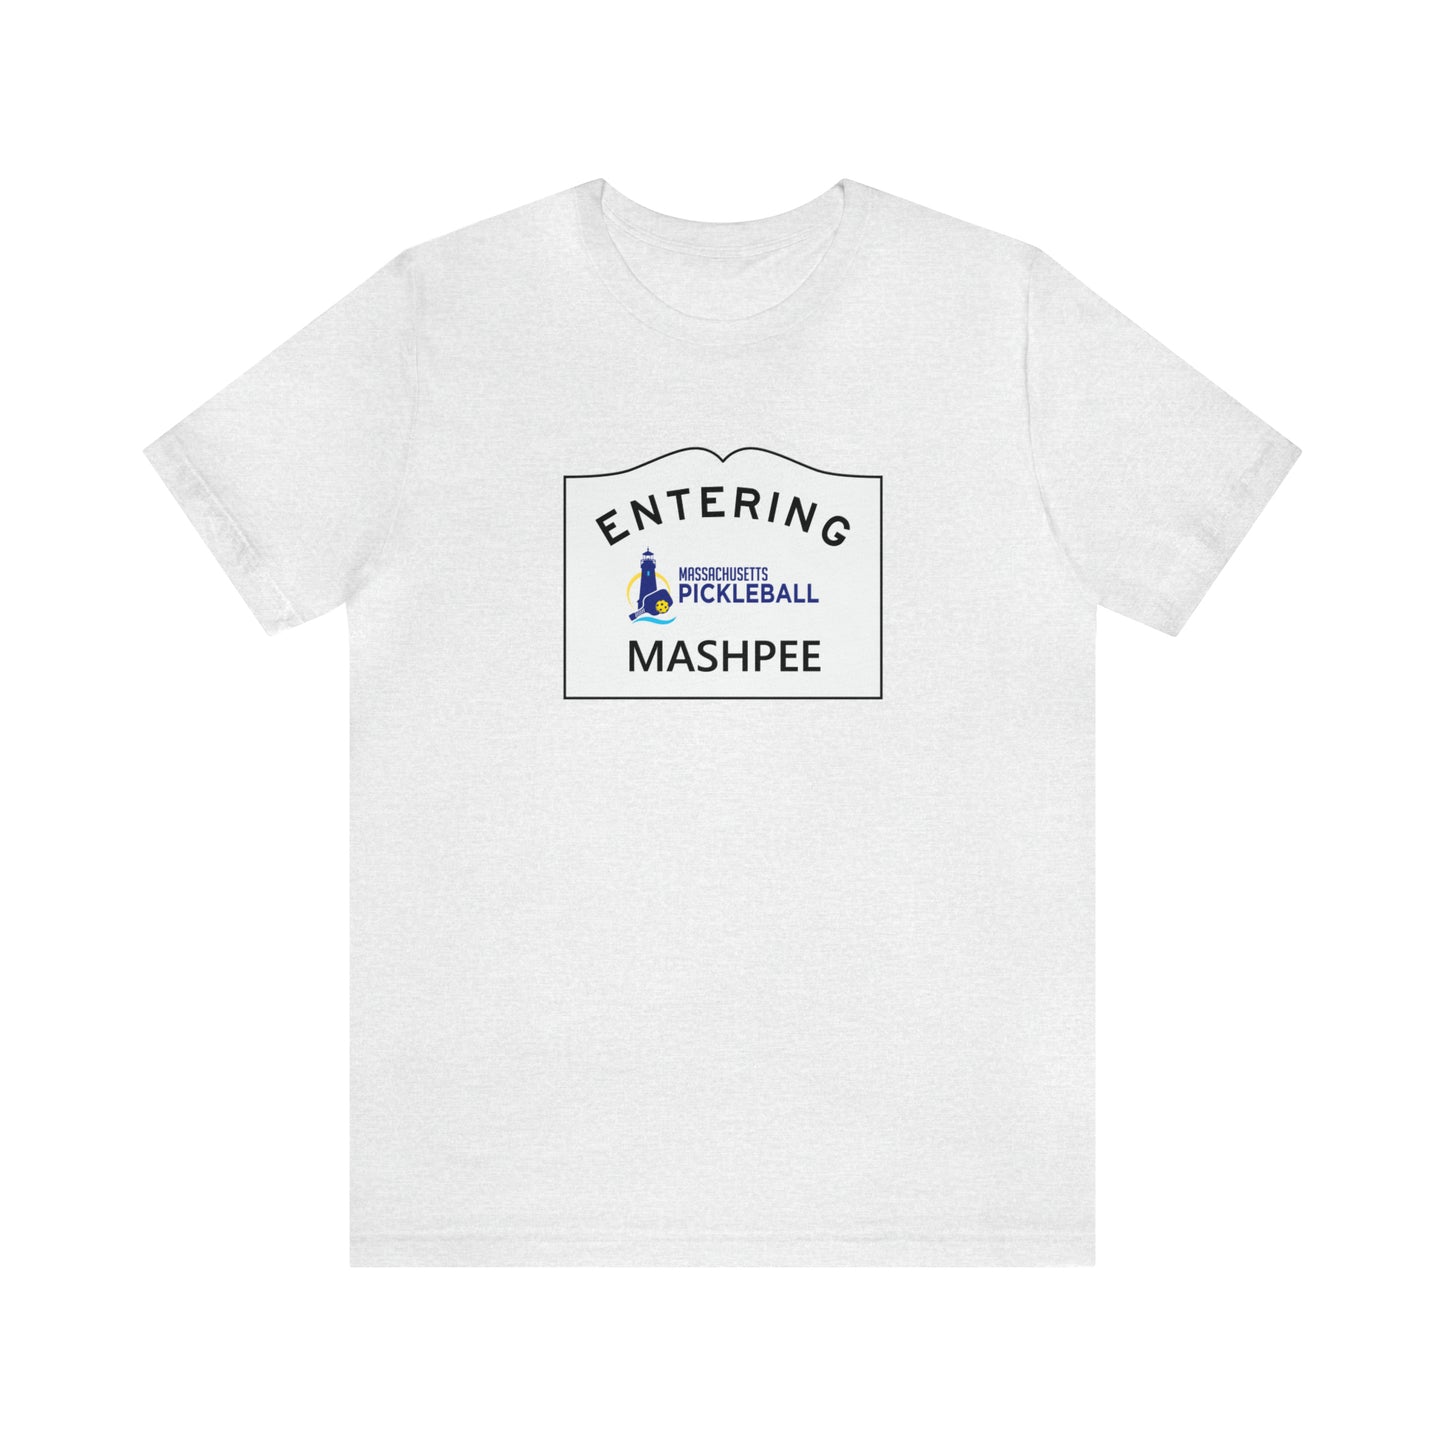 Mashpee, Mass Pickleball Short Sleeve T-Shirt